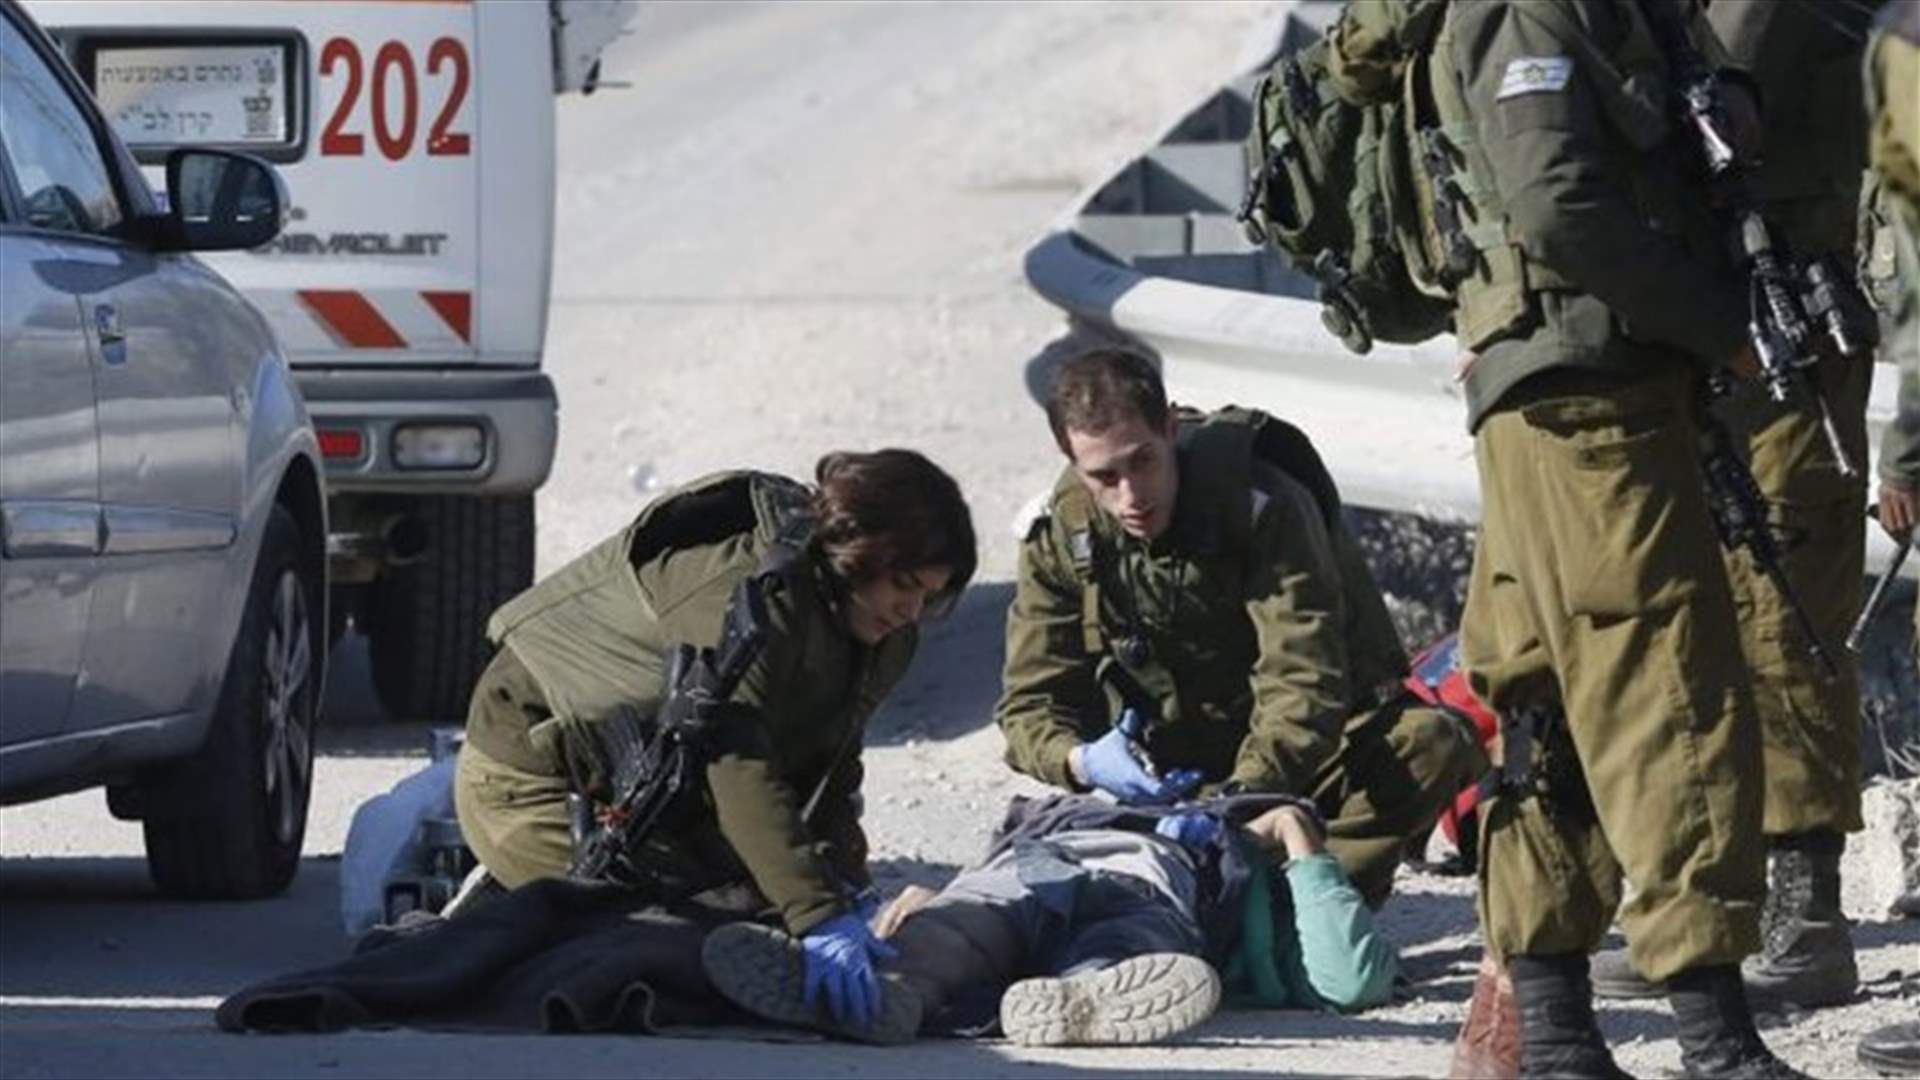 Palestinian gunman shot dead after wounding three Israeli soldiers